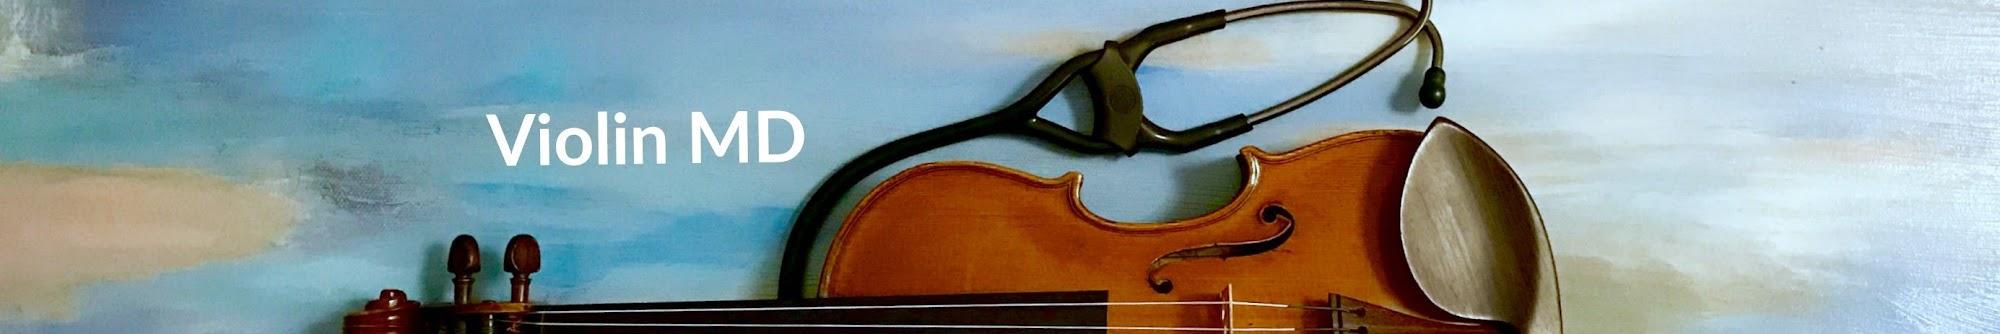 Violin MD